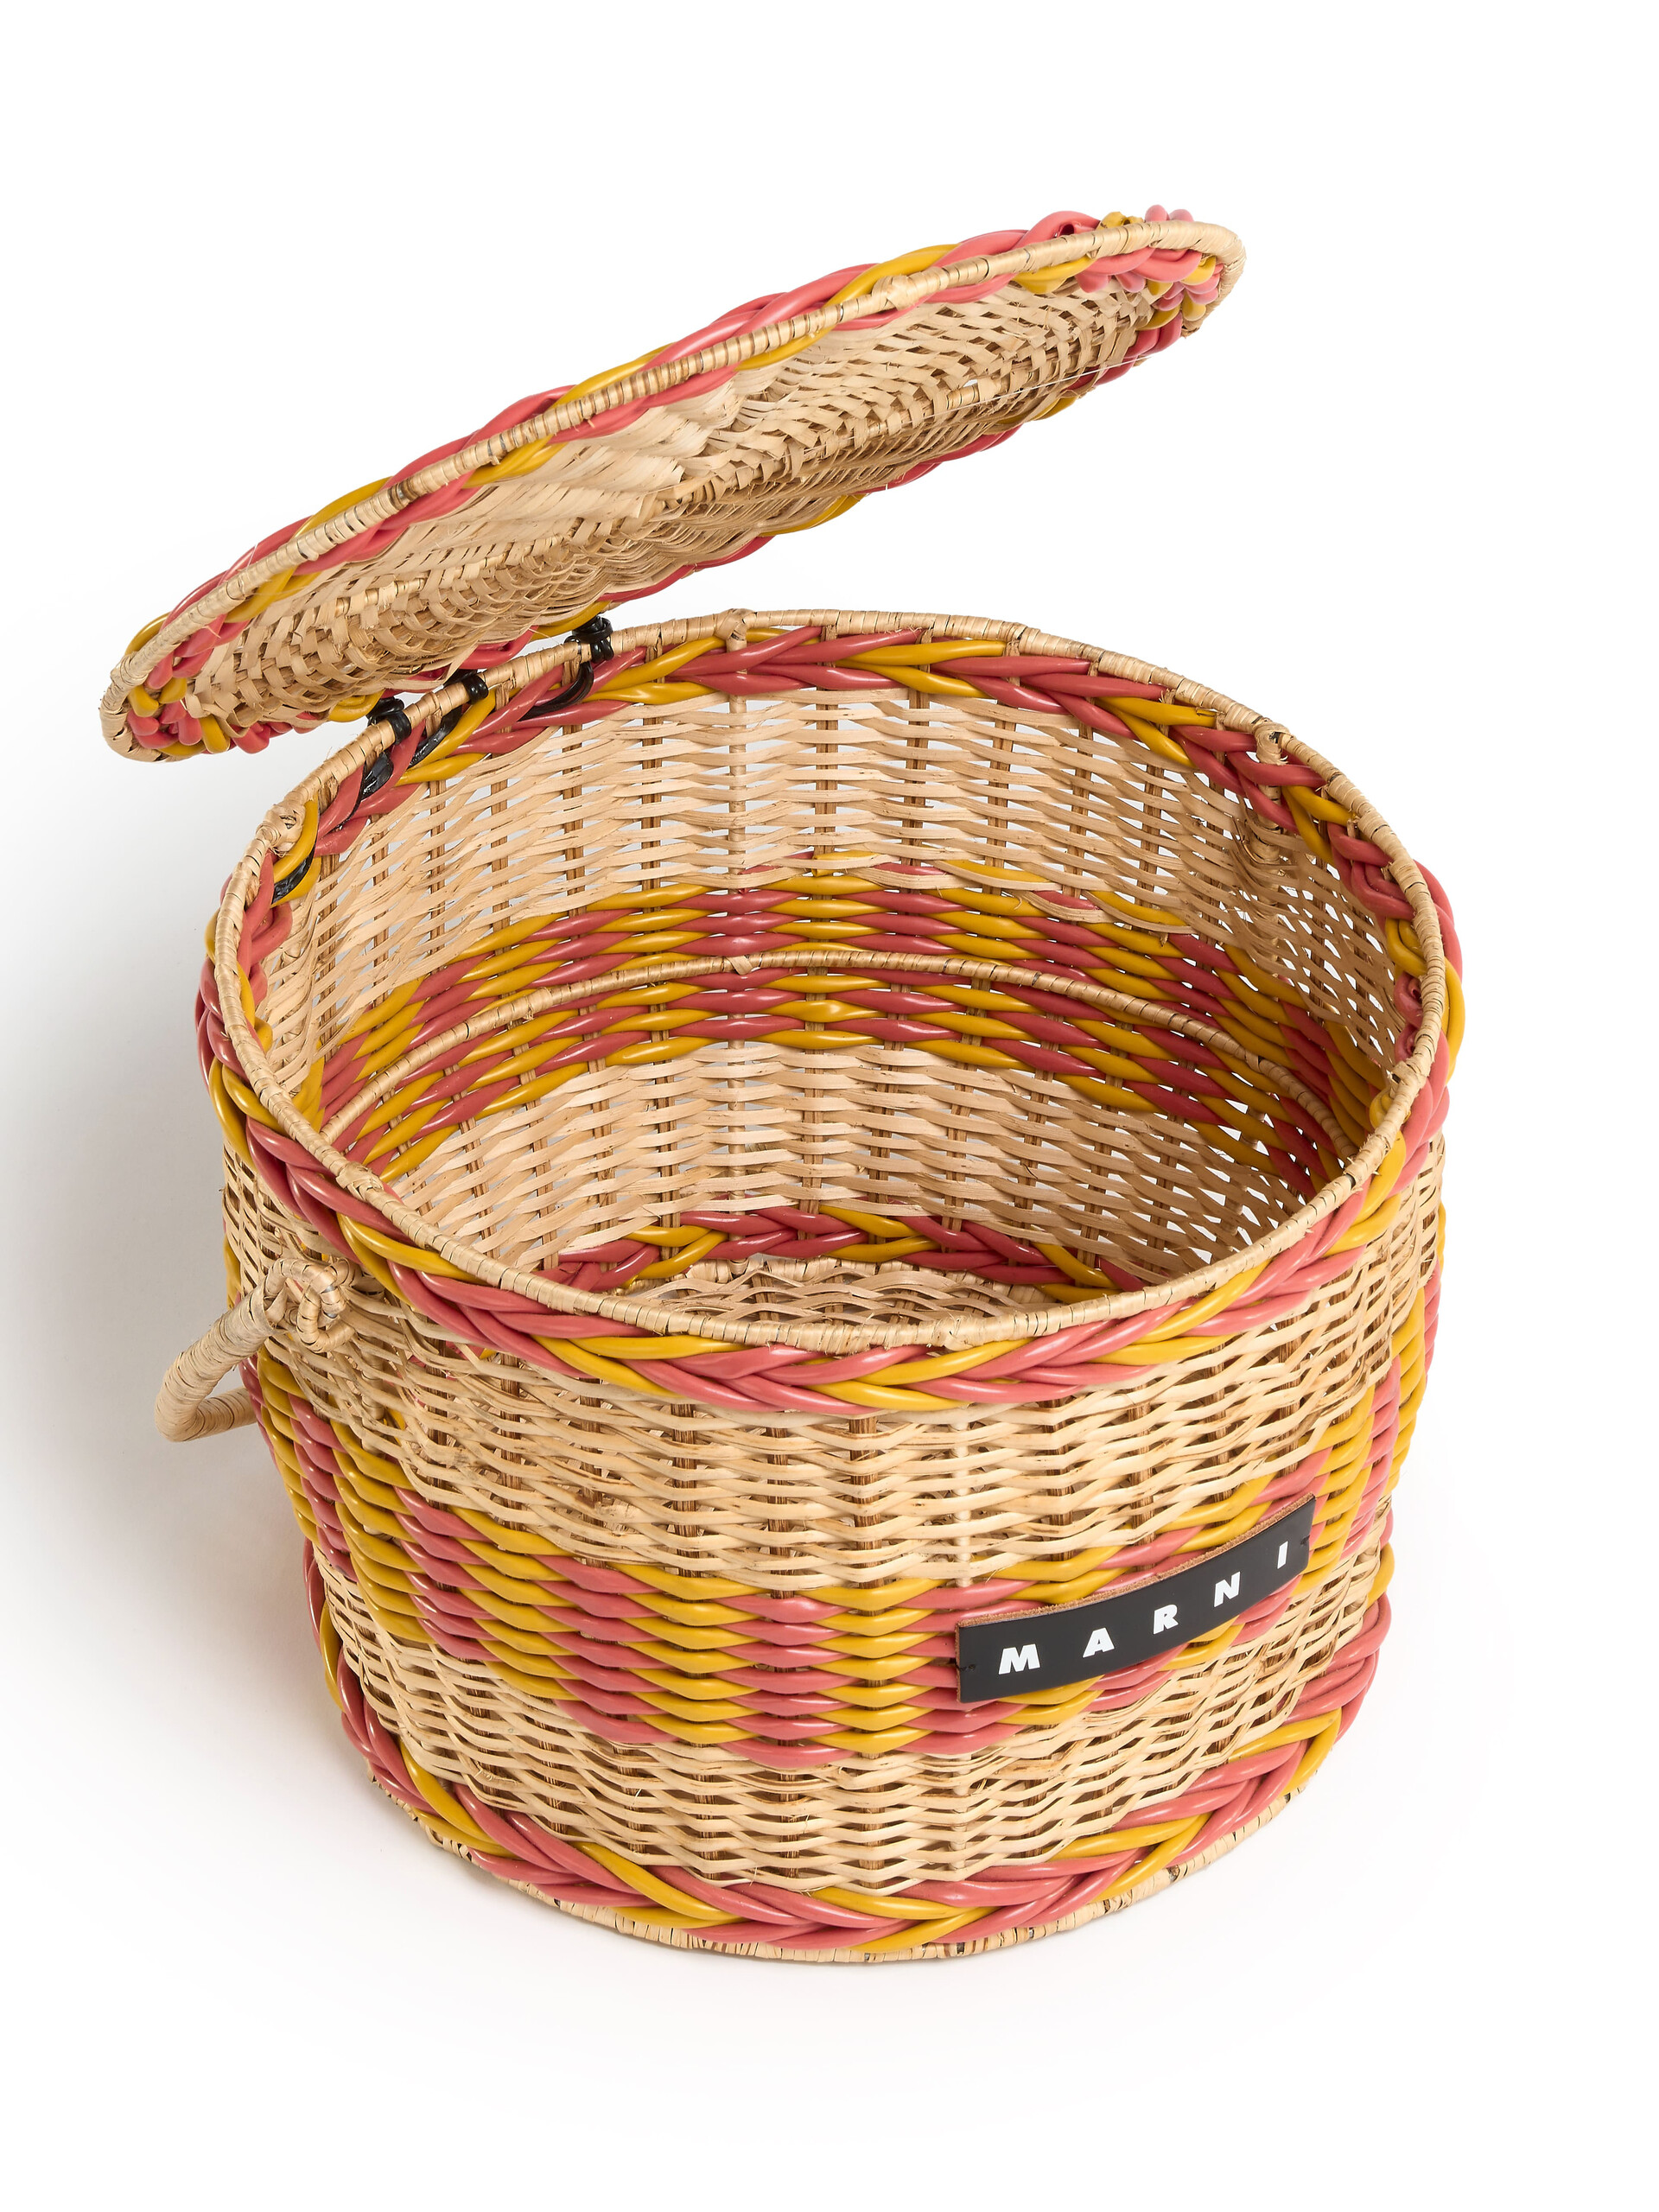 Orange natural fibre MARNI MARKET picnic basket - Accessories - Image 4